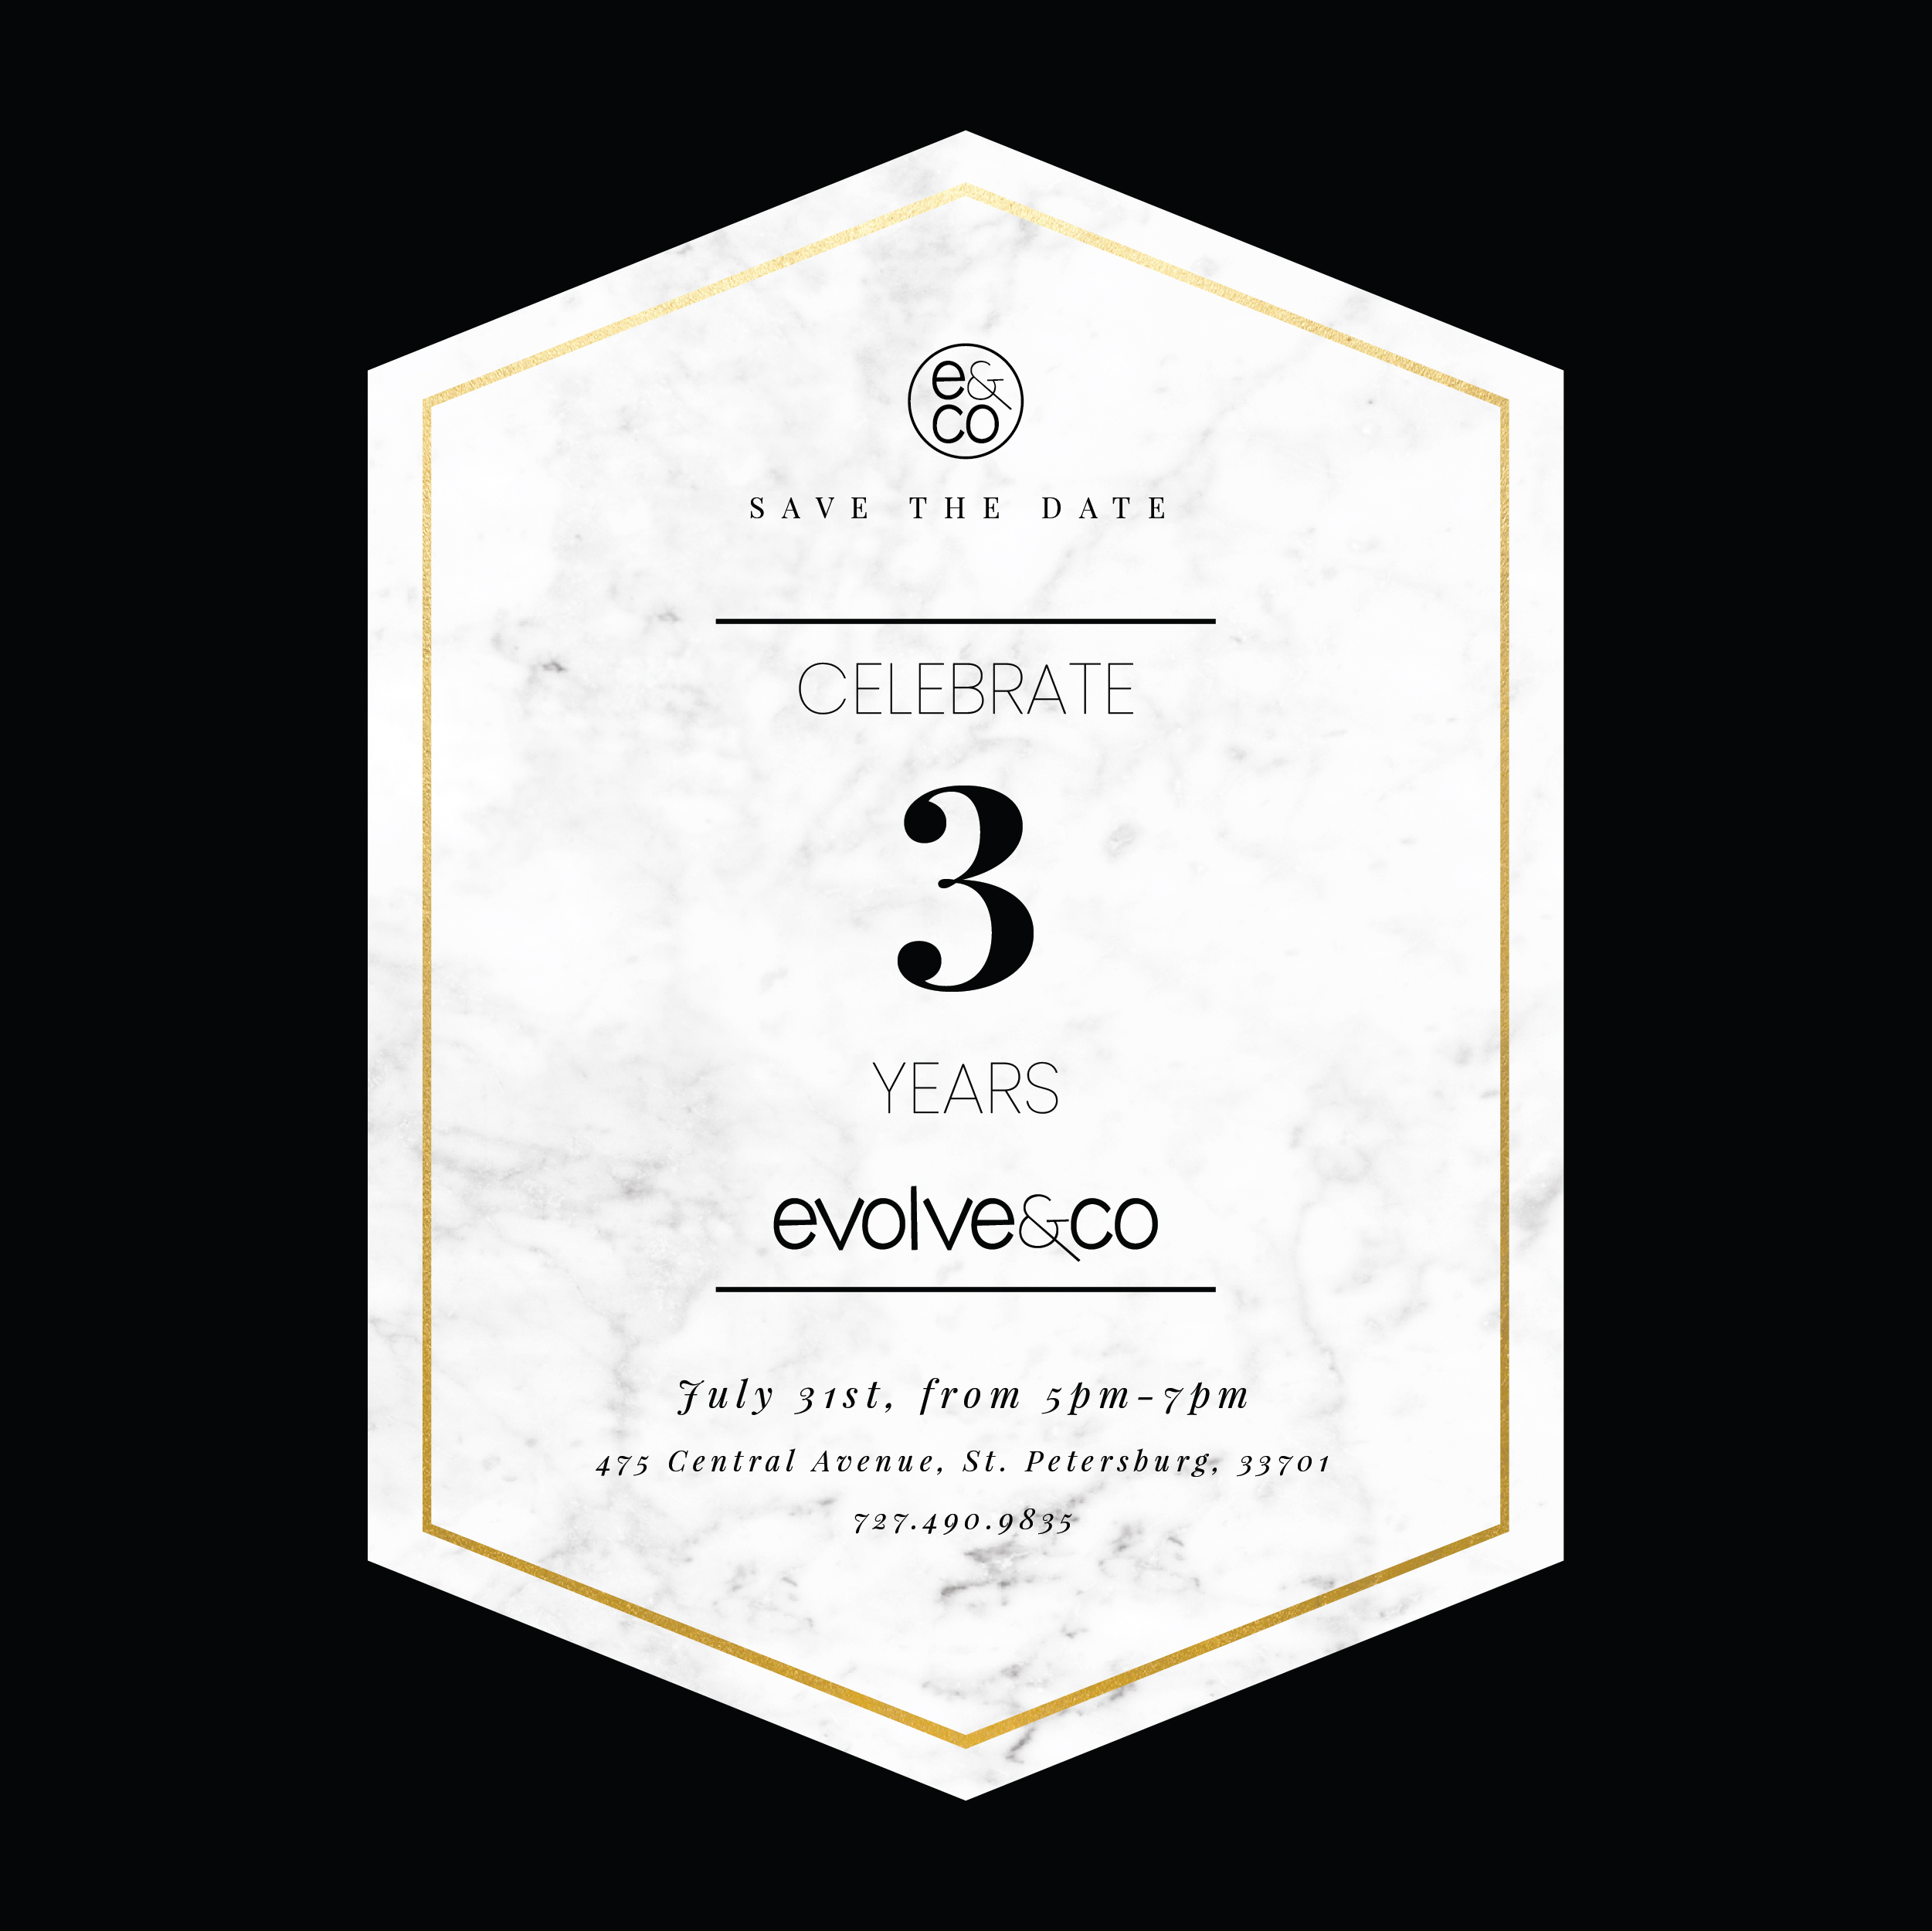 Evolve & Co Hosts Third Anniversary Reception July 31st